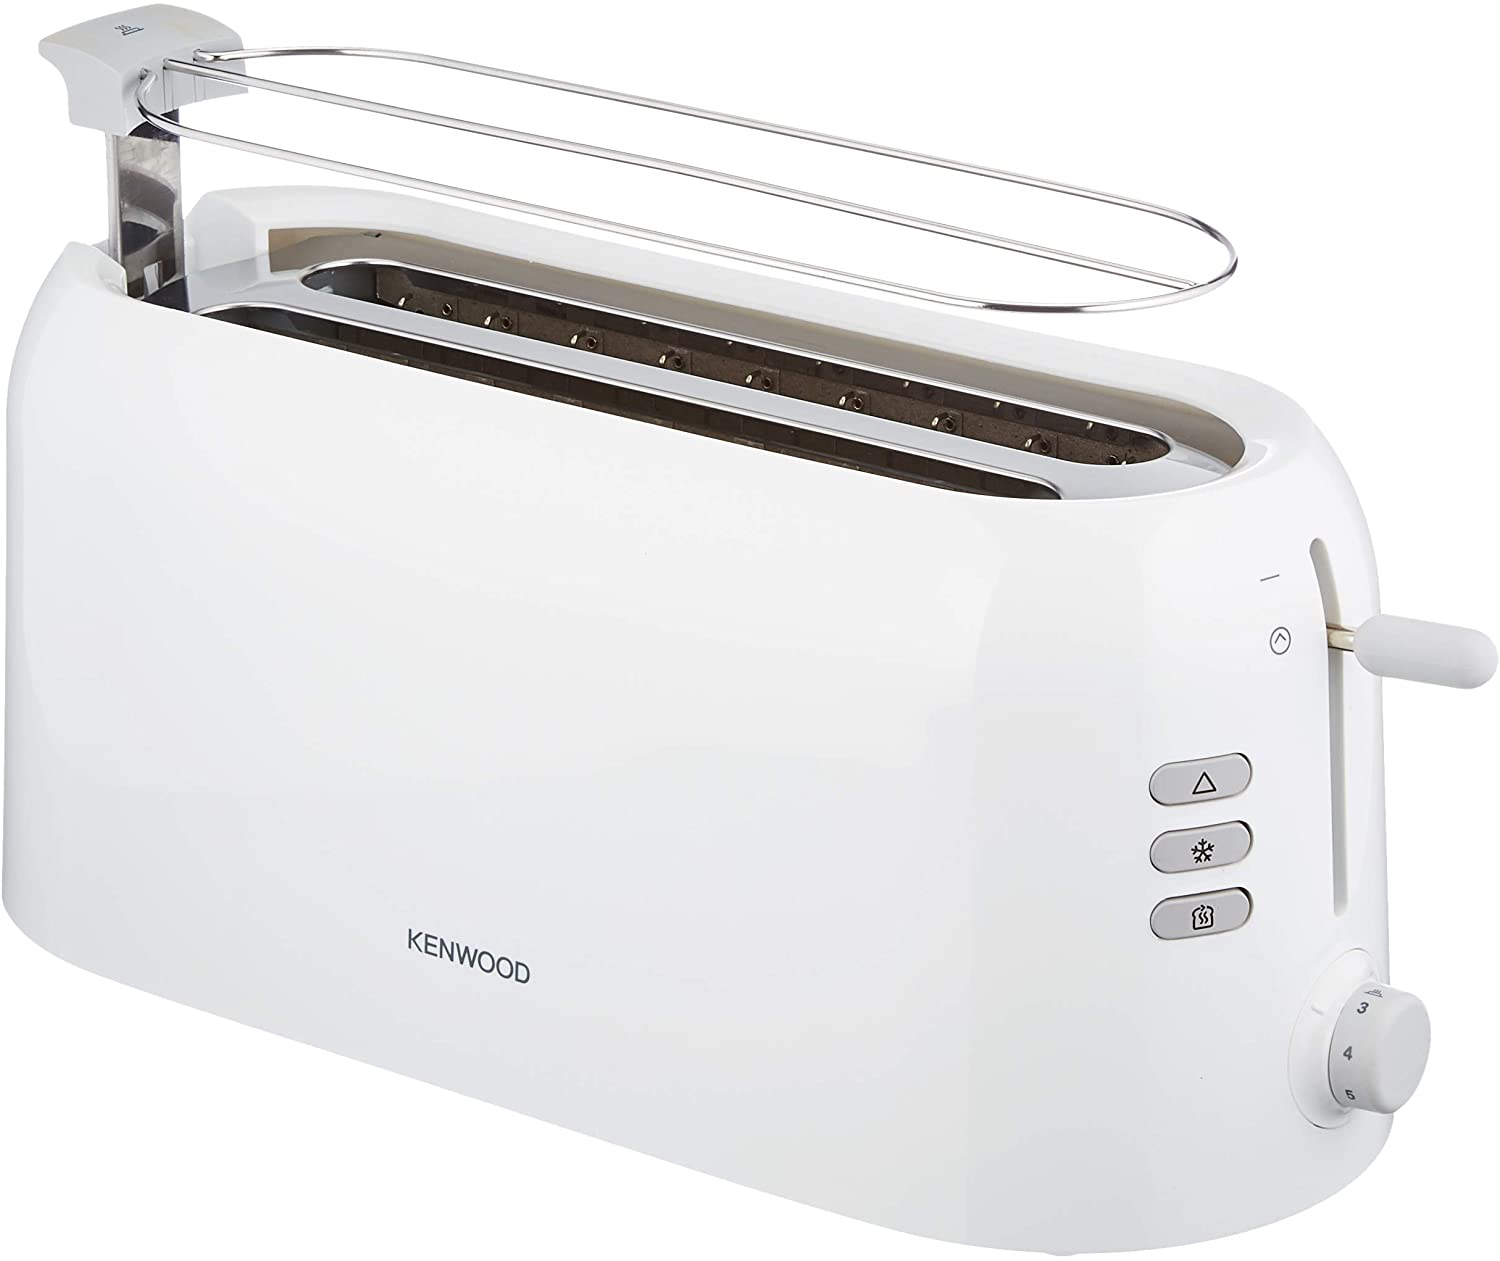 Kenwood TTP230 Double Slot Toaster